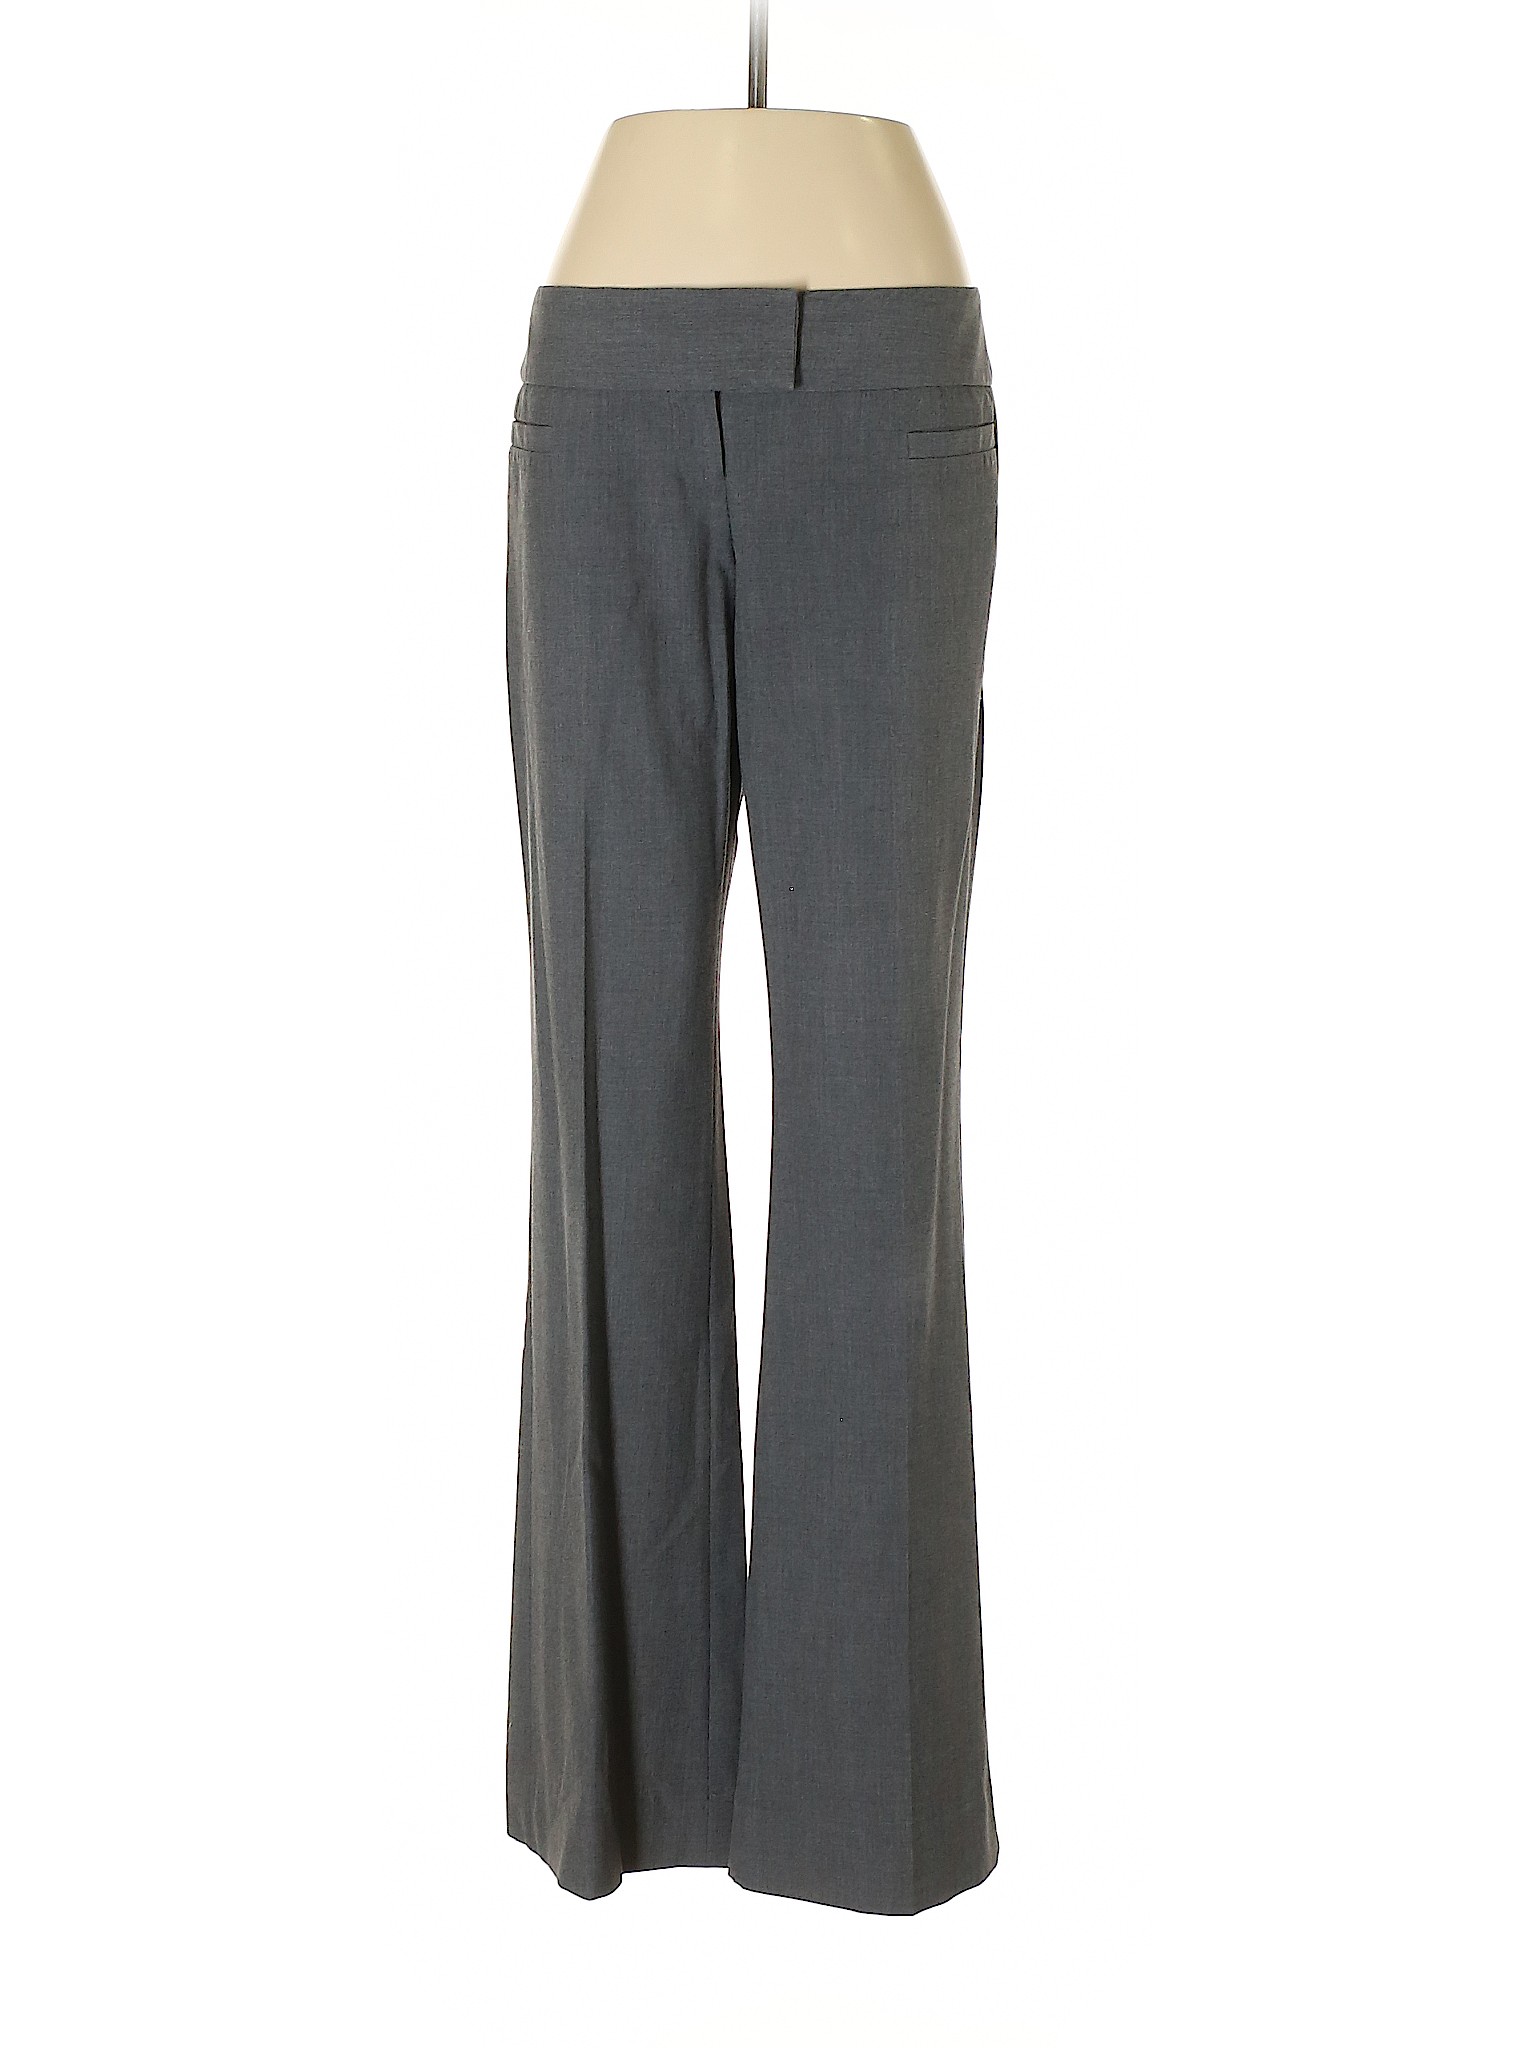 The Limited Women Gray Dress Pants 4 | eBay